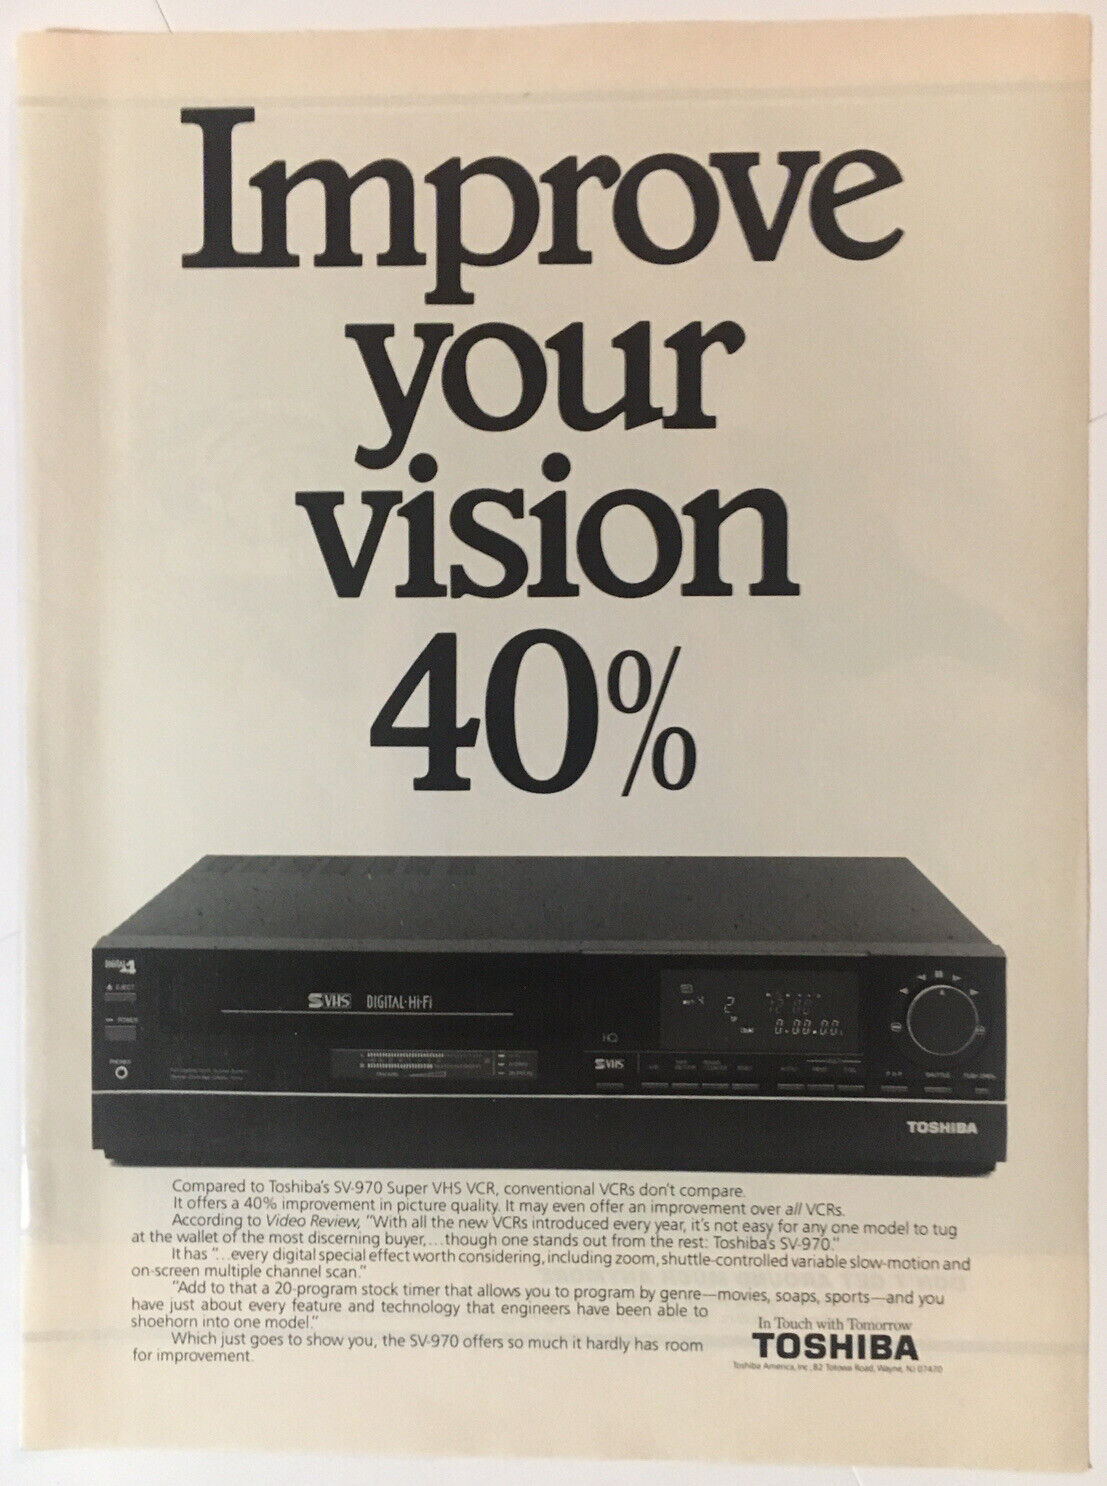 Toshiba SV-970 Super VHS VCR 1988 Vintage Print Ad 8x11 Inches Wall Decor